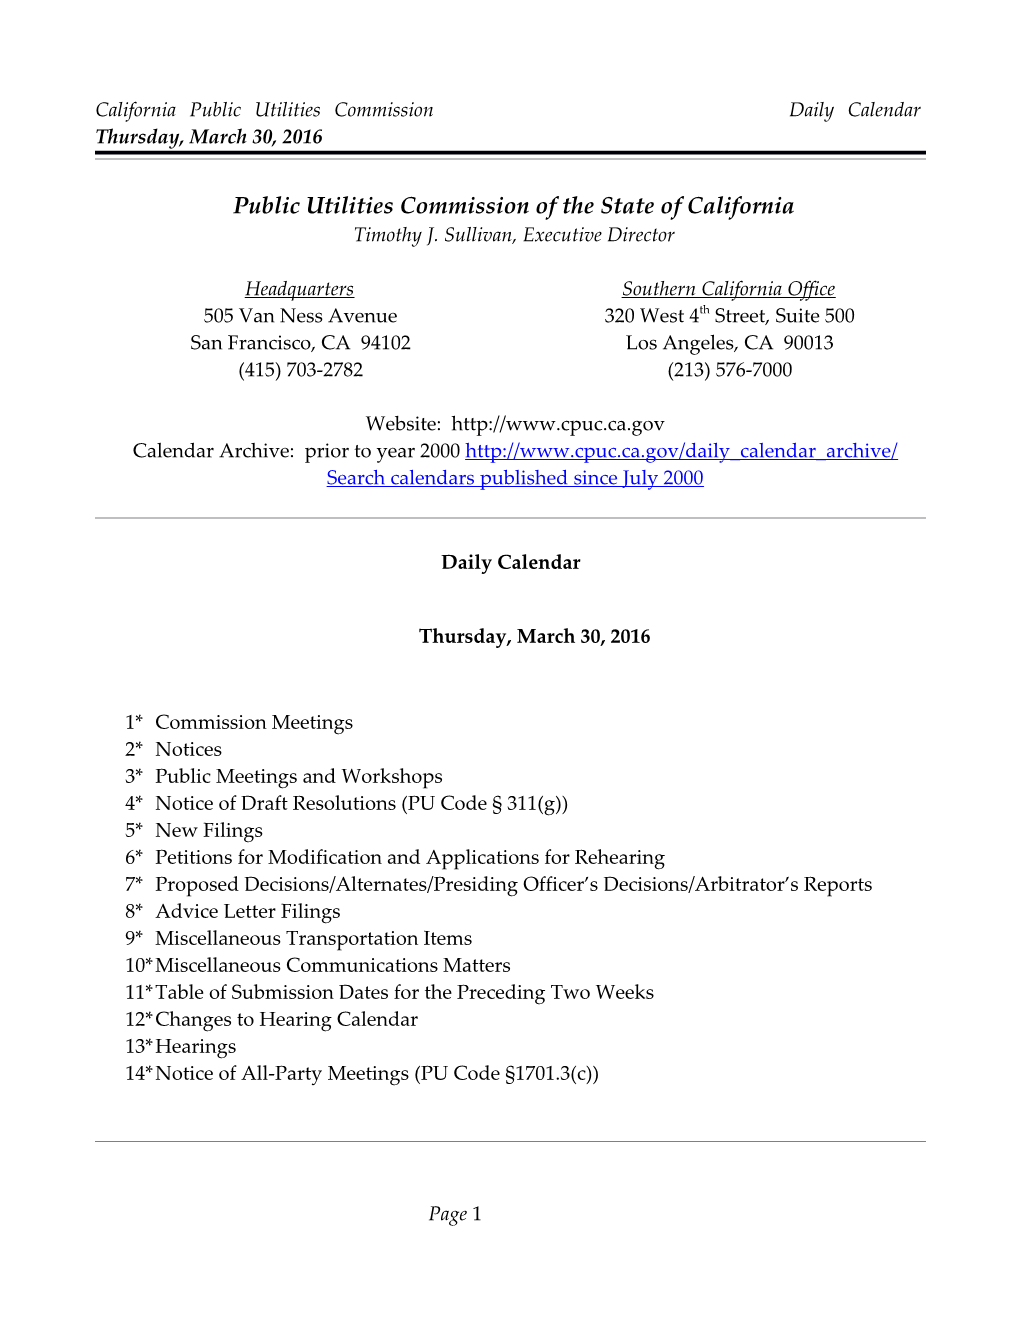 California Public Utilities Commission Daily Calendar Thursday, March 30, 2016